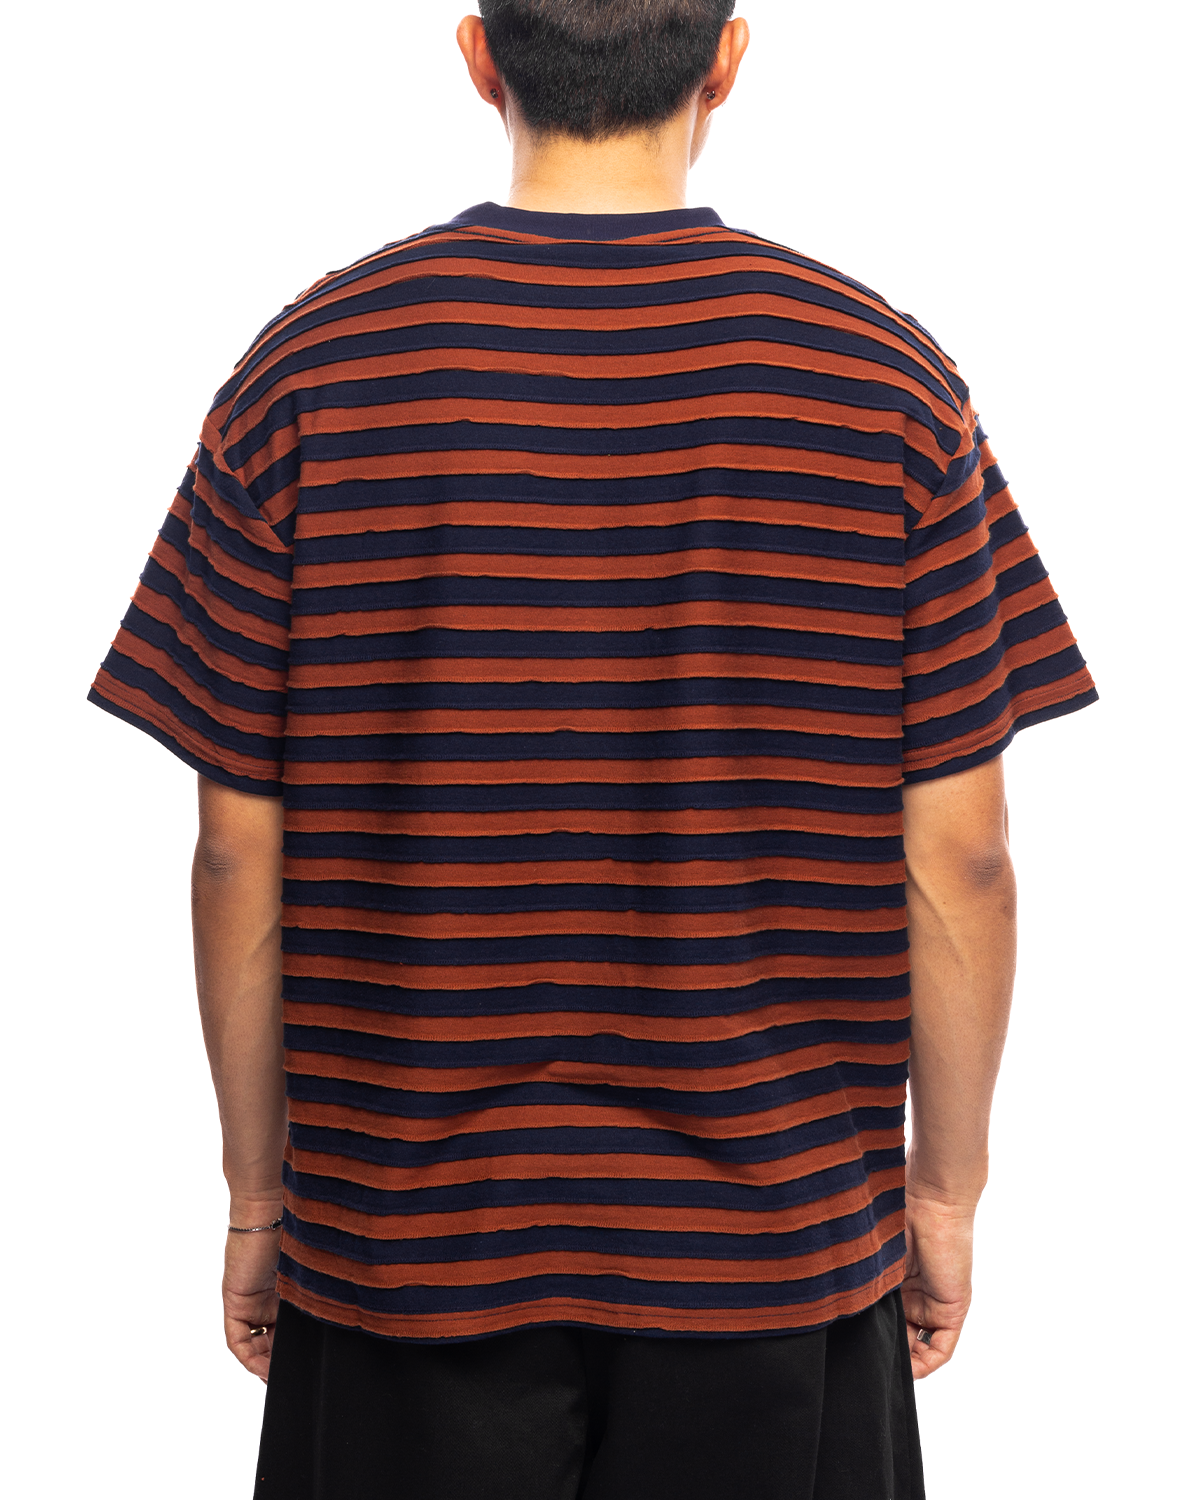 Denny Blaine Striped T-shirt Navy/Light Brown